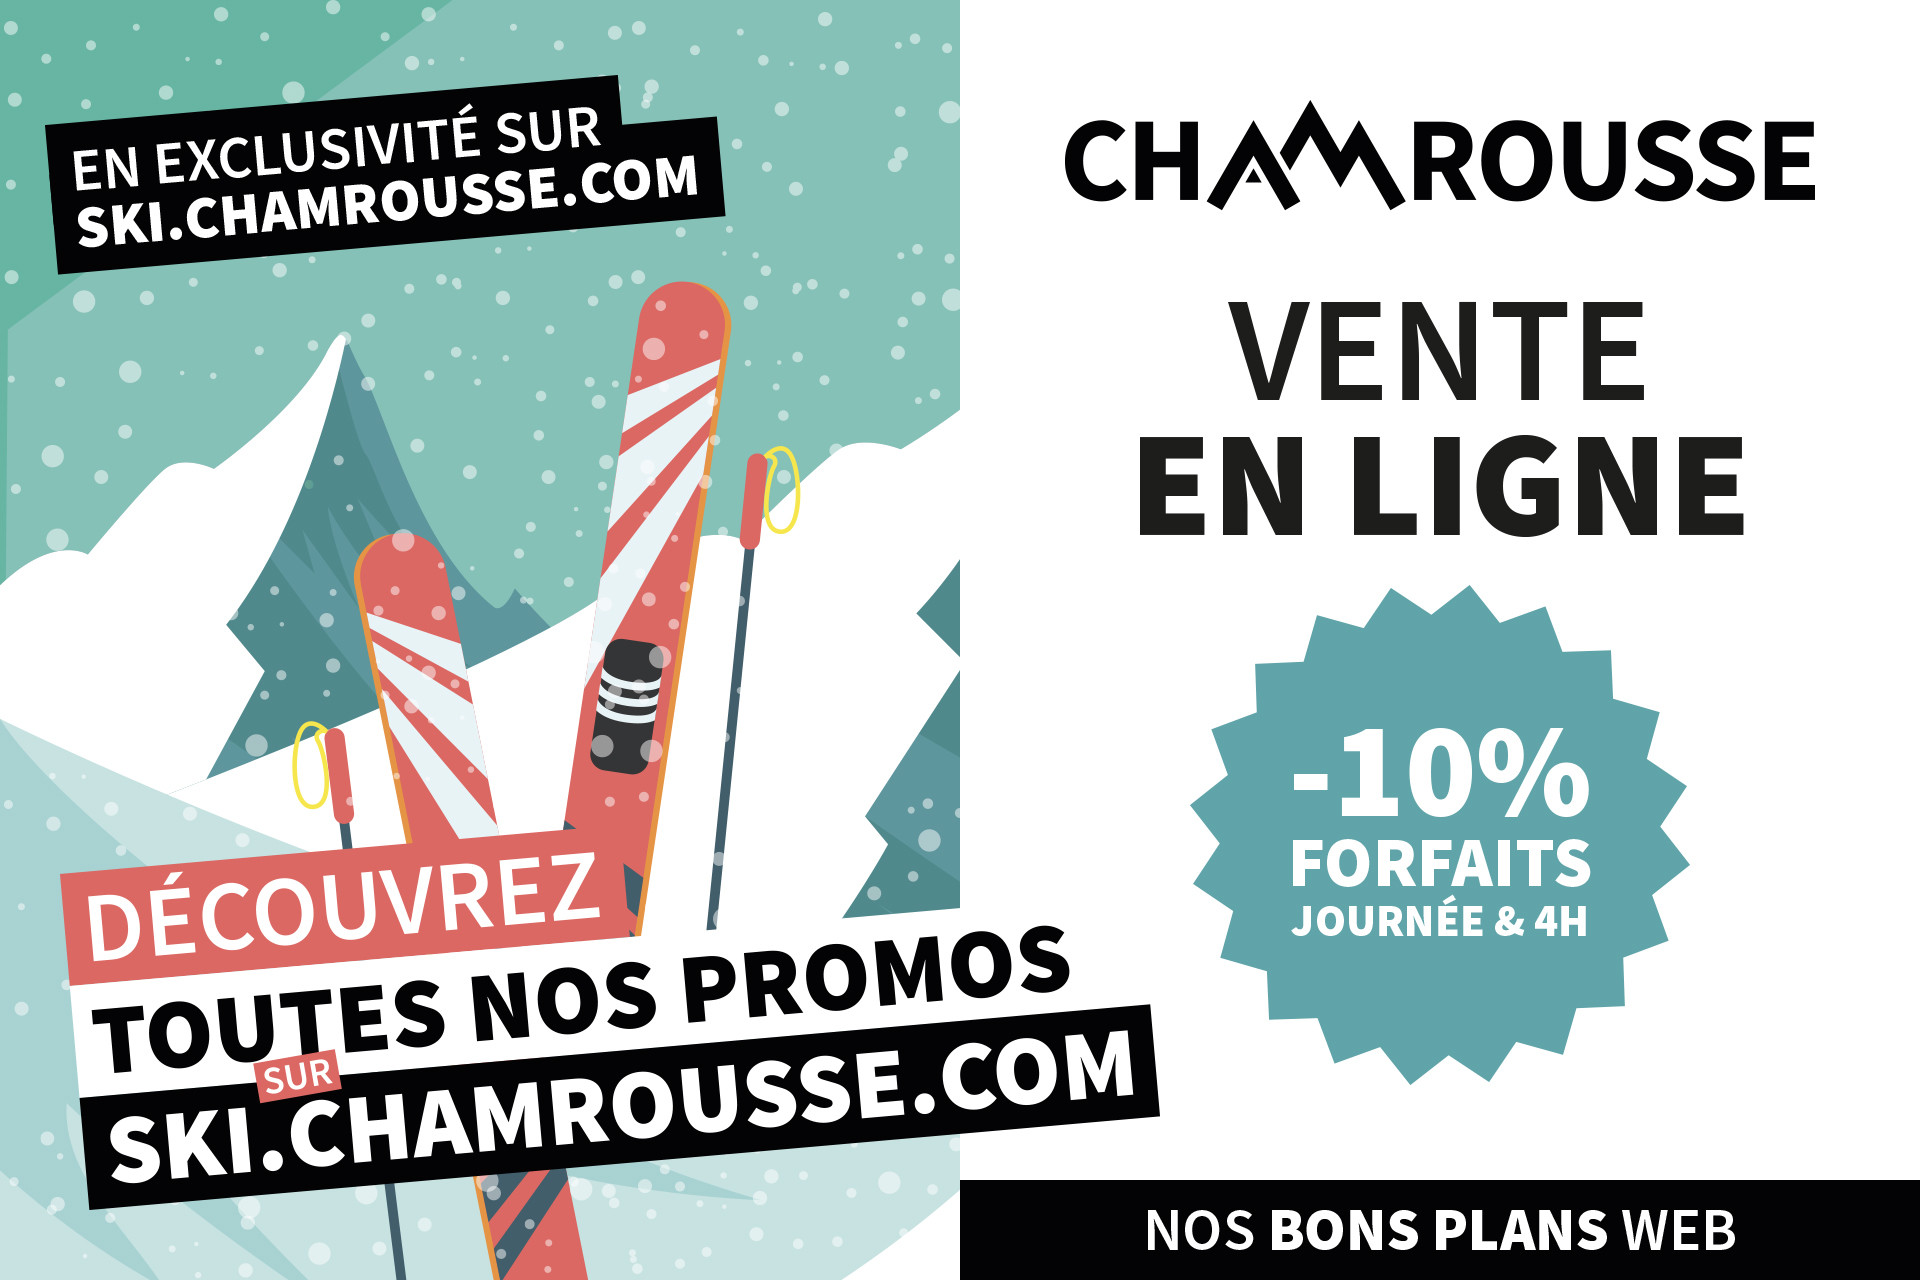 Promotion web achat en ligne forfait ski Chamrousse